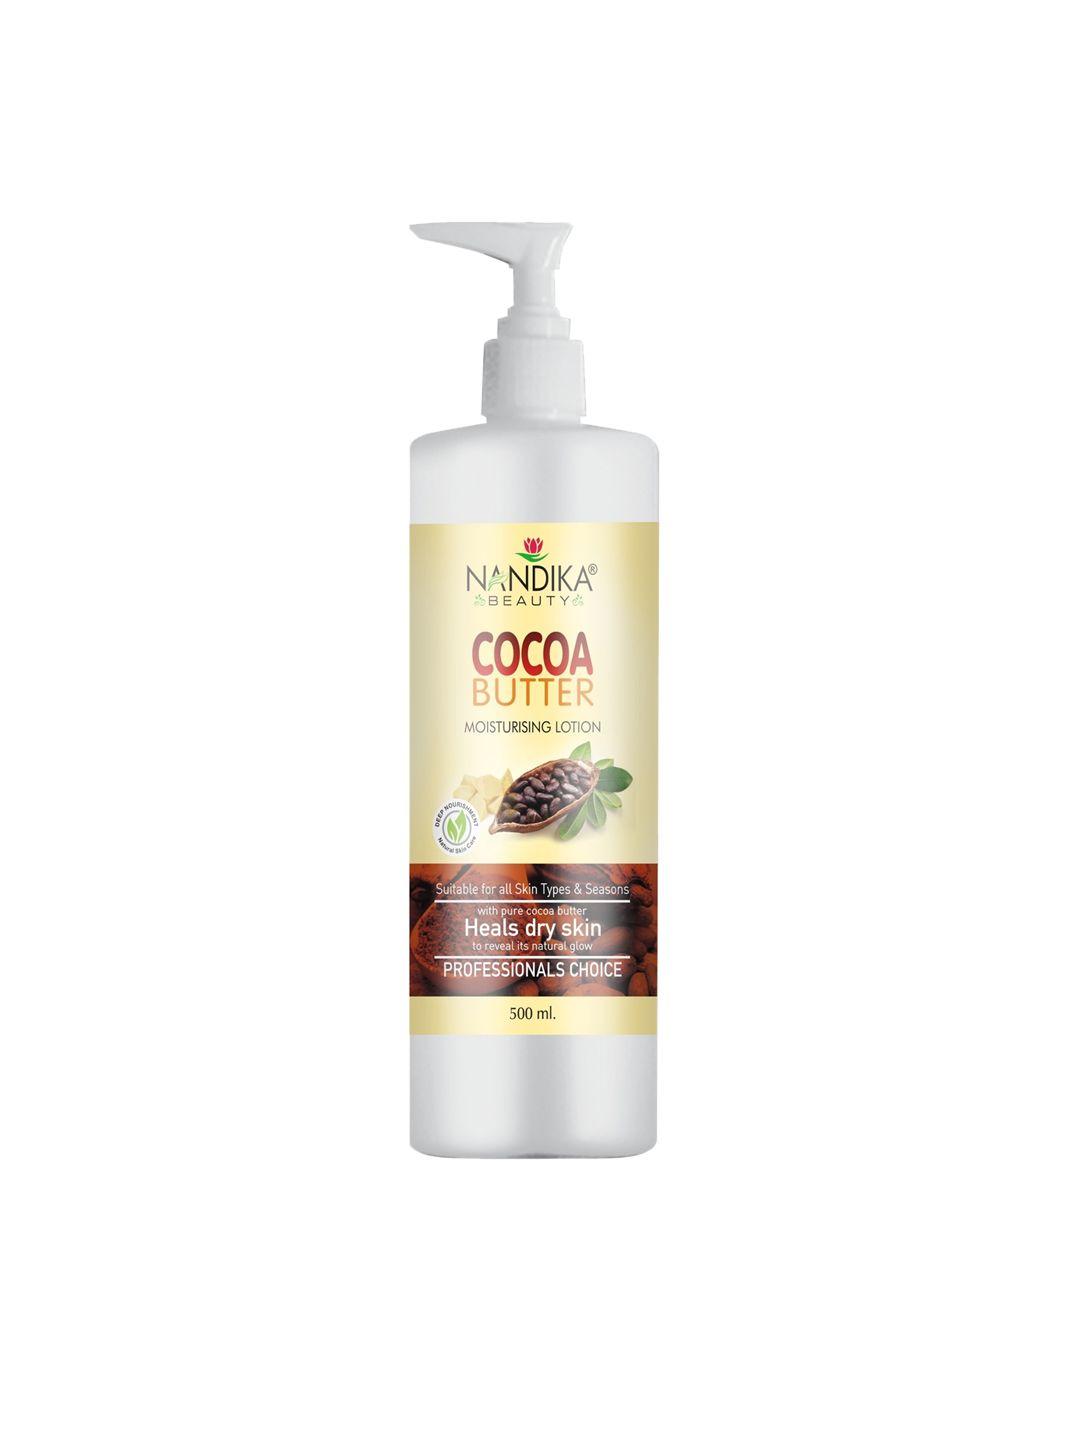 nandika beauty cocobutter moisturising lotion for all skin types - 500ml